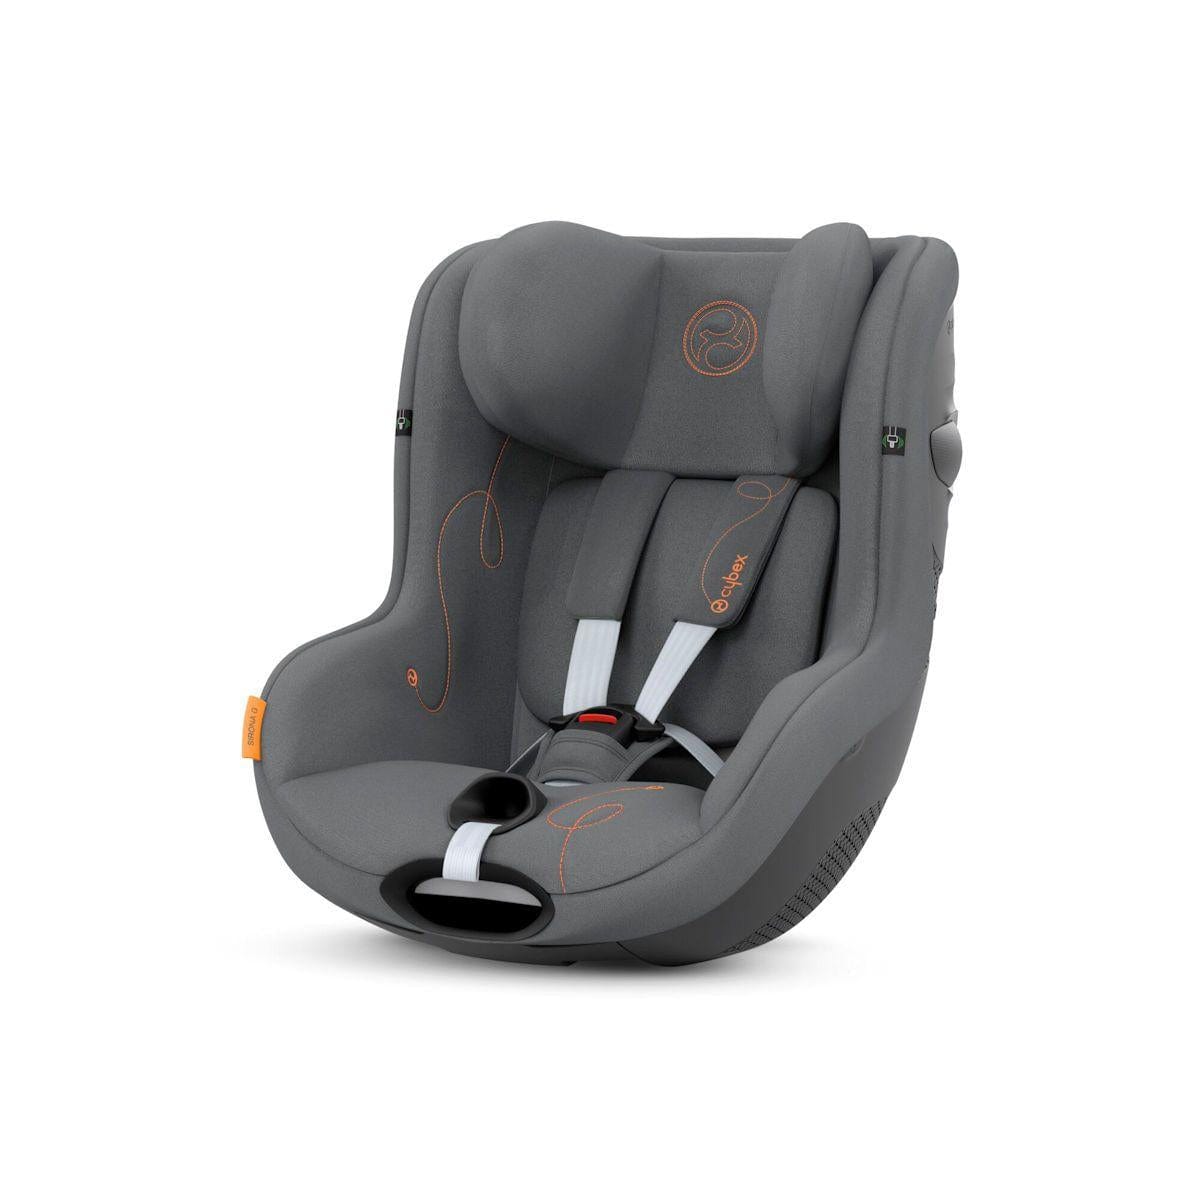 Cybex G Car Seat Bundle in Lava Grey Baby Car Seats 15302-LAV-GRY 4063846431045